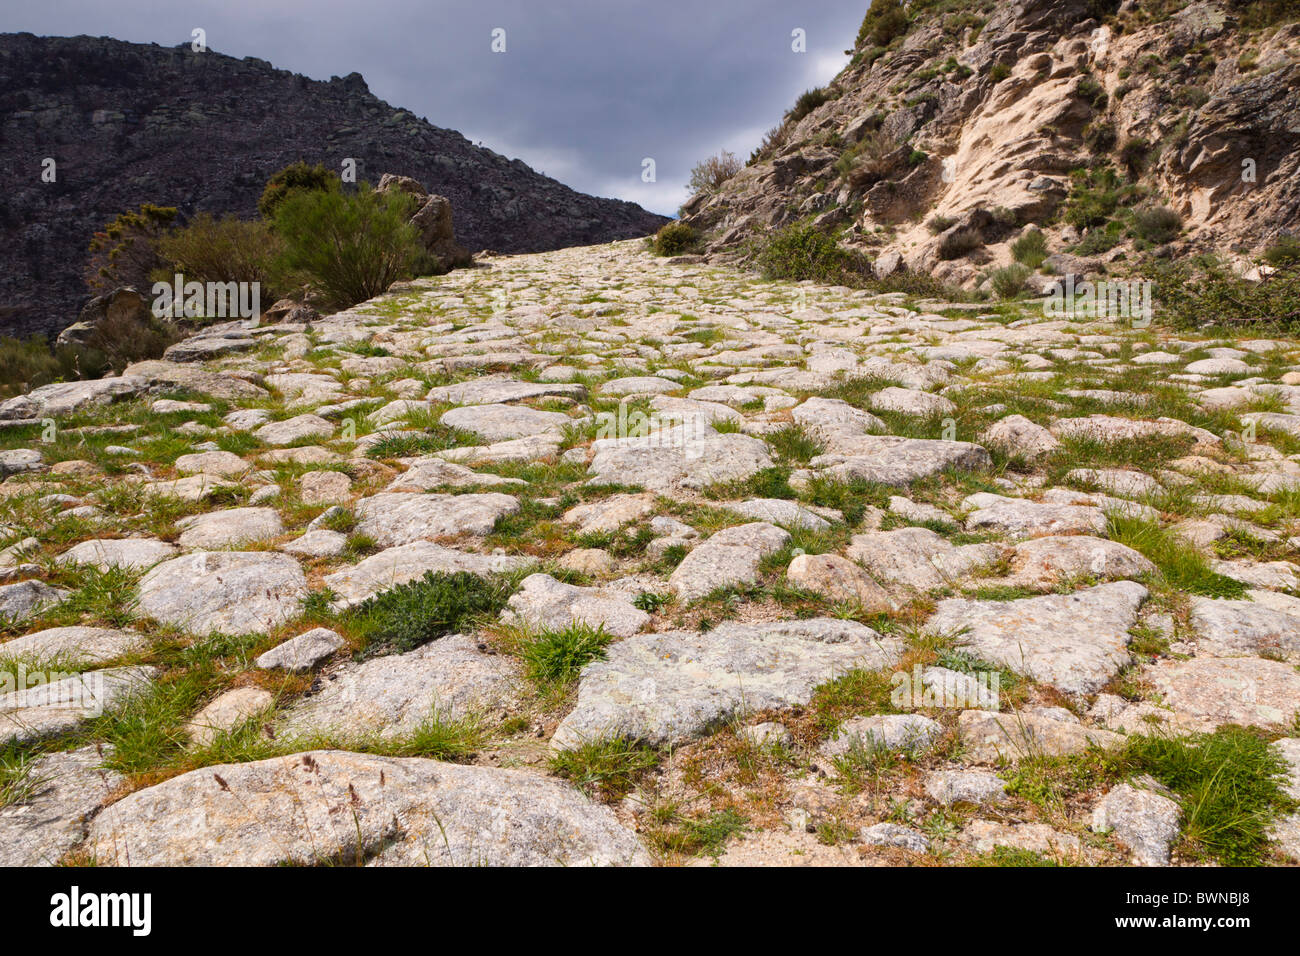 Roman road at Puerto del Pico, near Mombeltran, Sierra de Gredos, Avila Province, Spain. Stock Photo